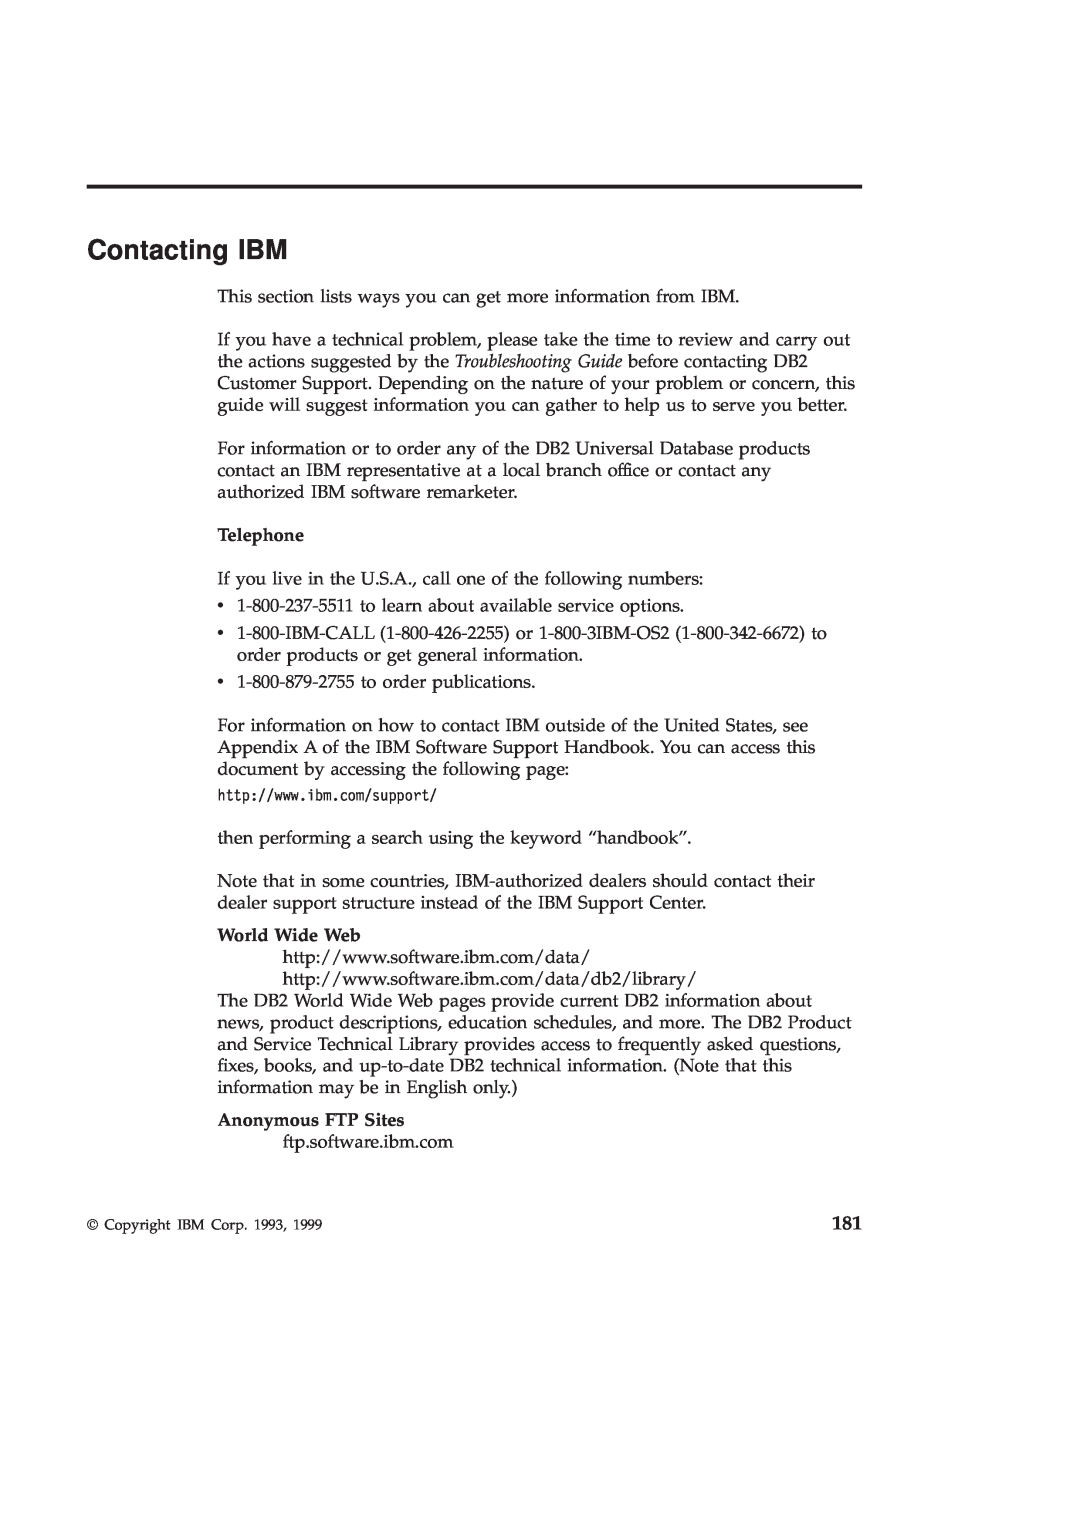 IBM GC09-2830-00 manual Contacting IBM, Telephone, Anonymous FTP Sites 